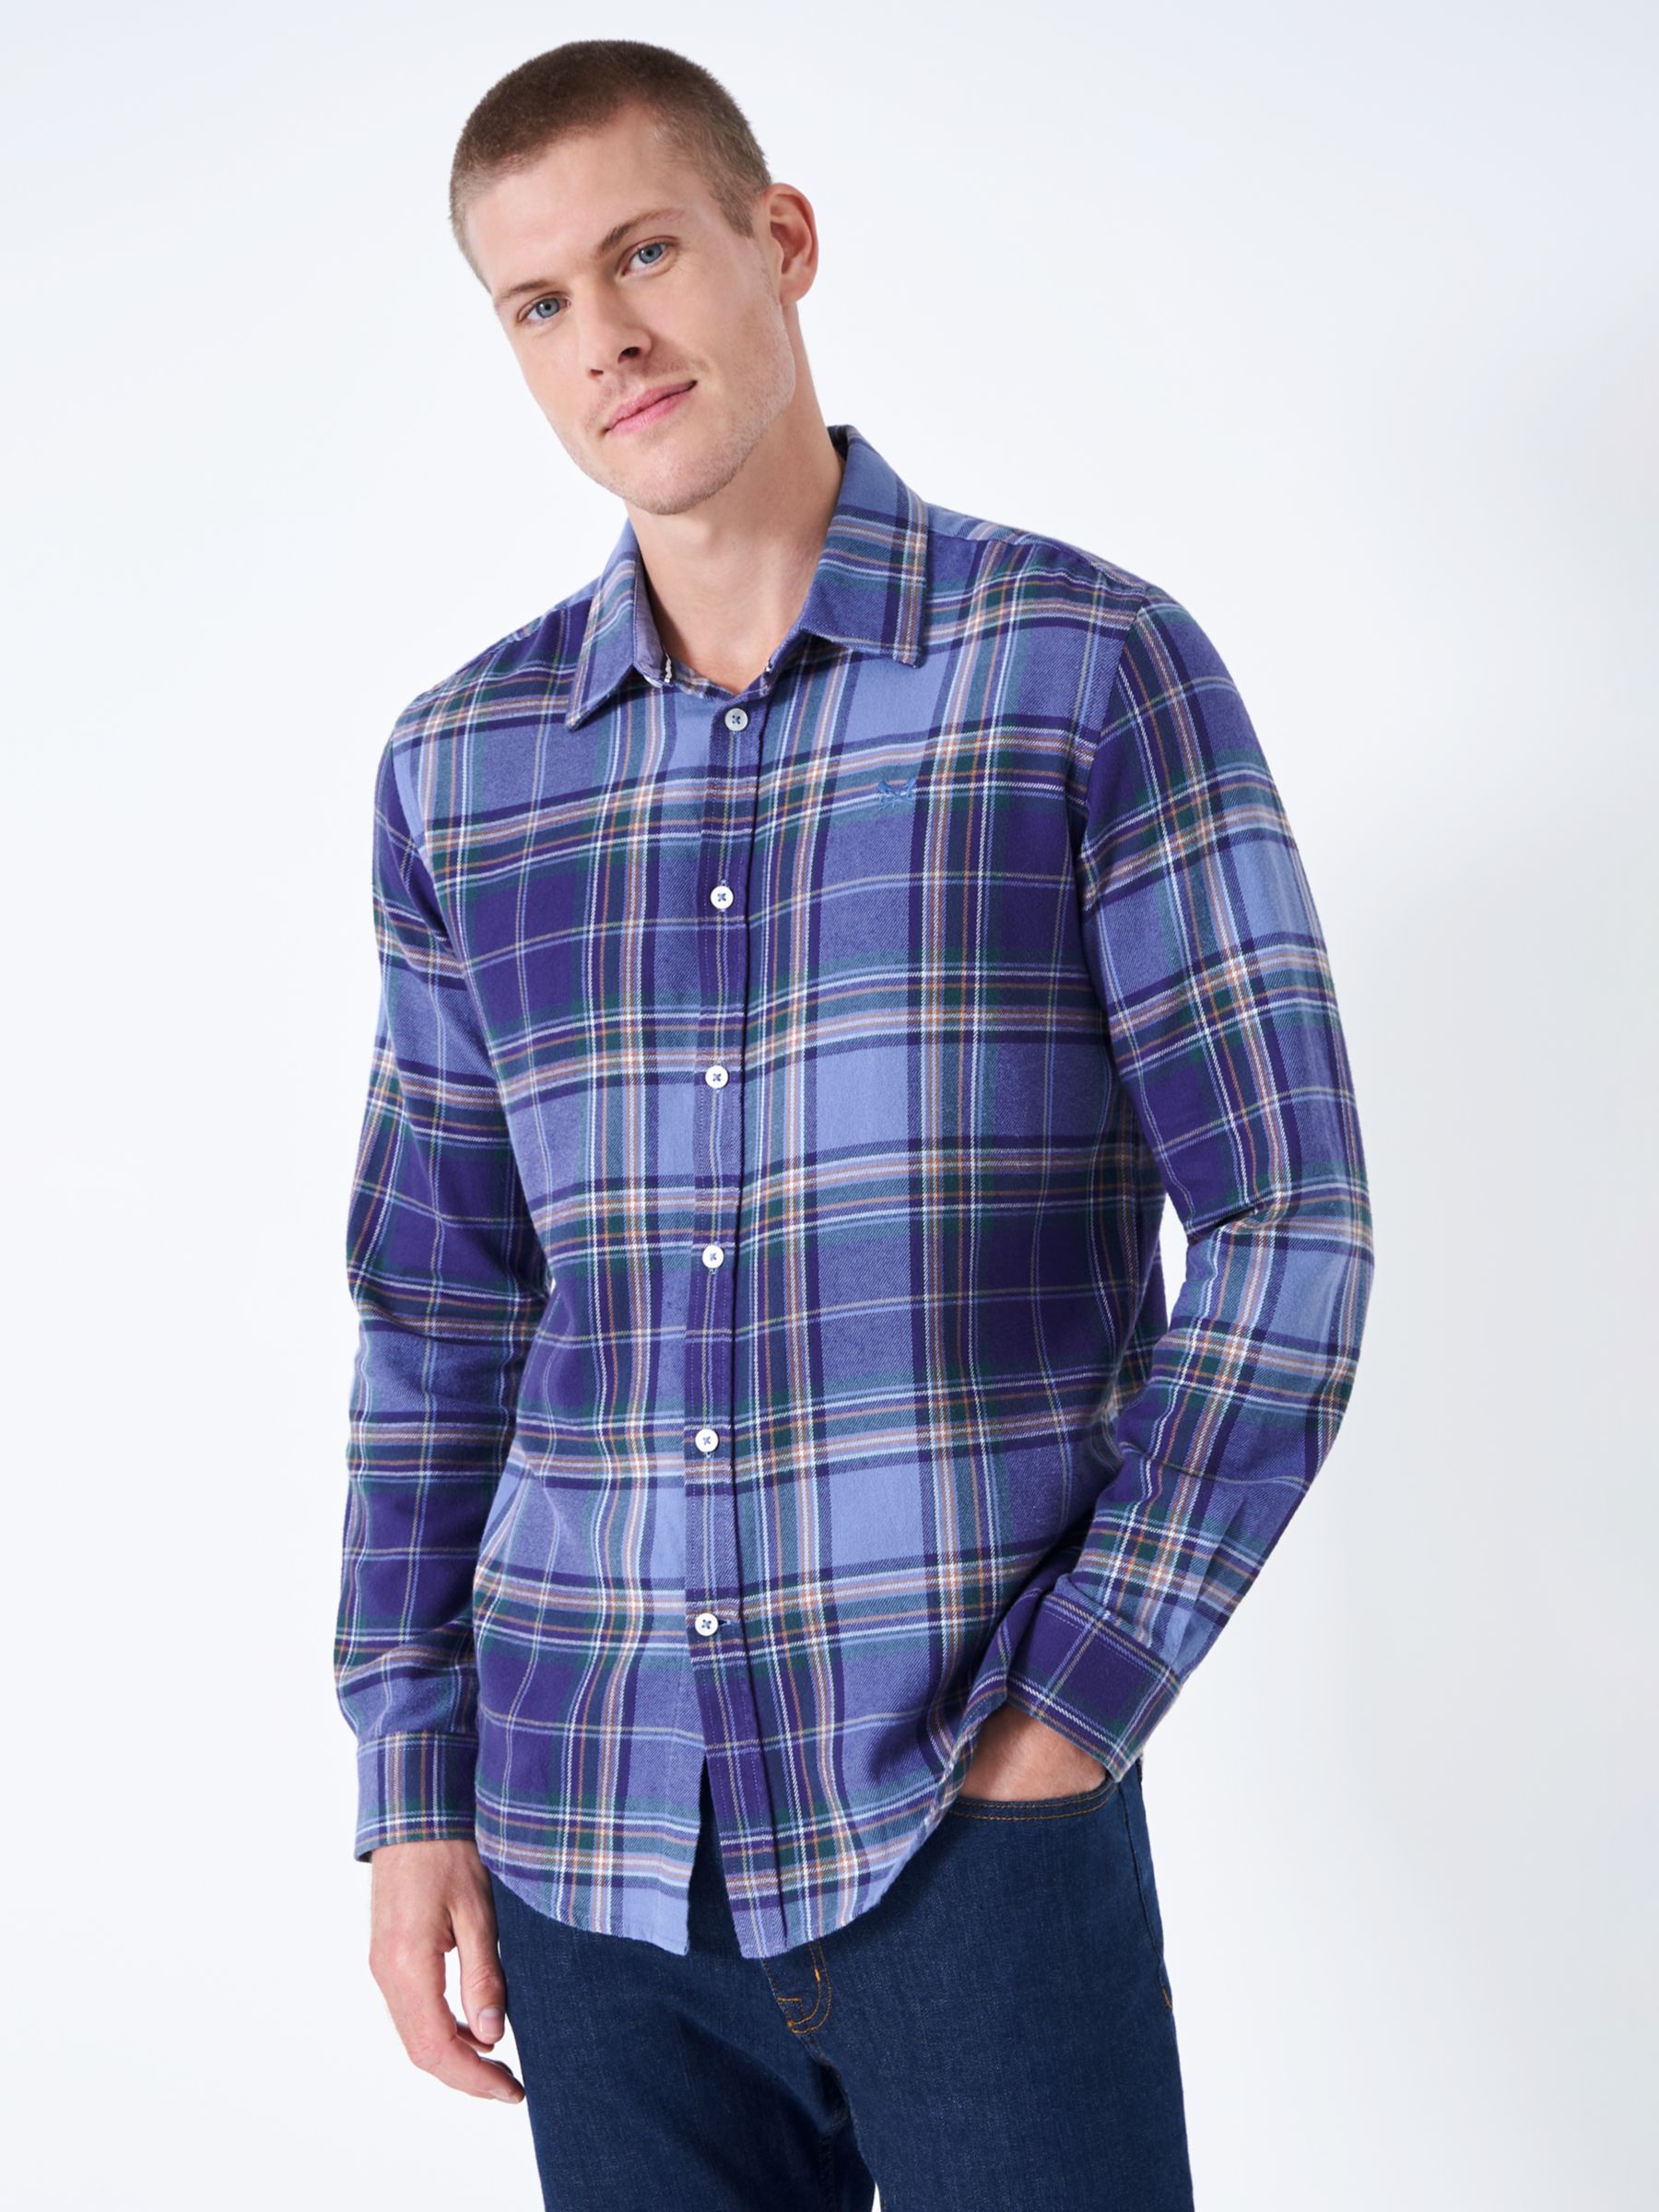 Crew Clothing Kipling Flannel Shirt, Blue/Multi, XL